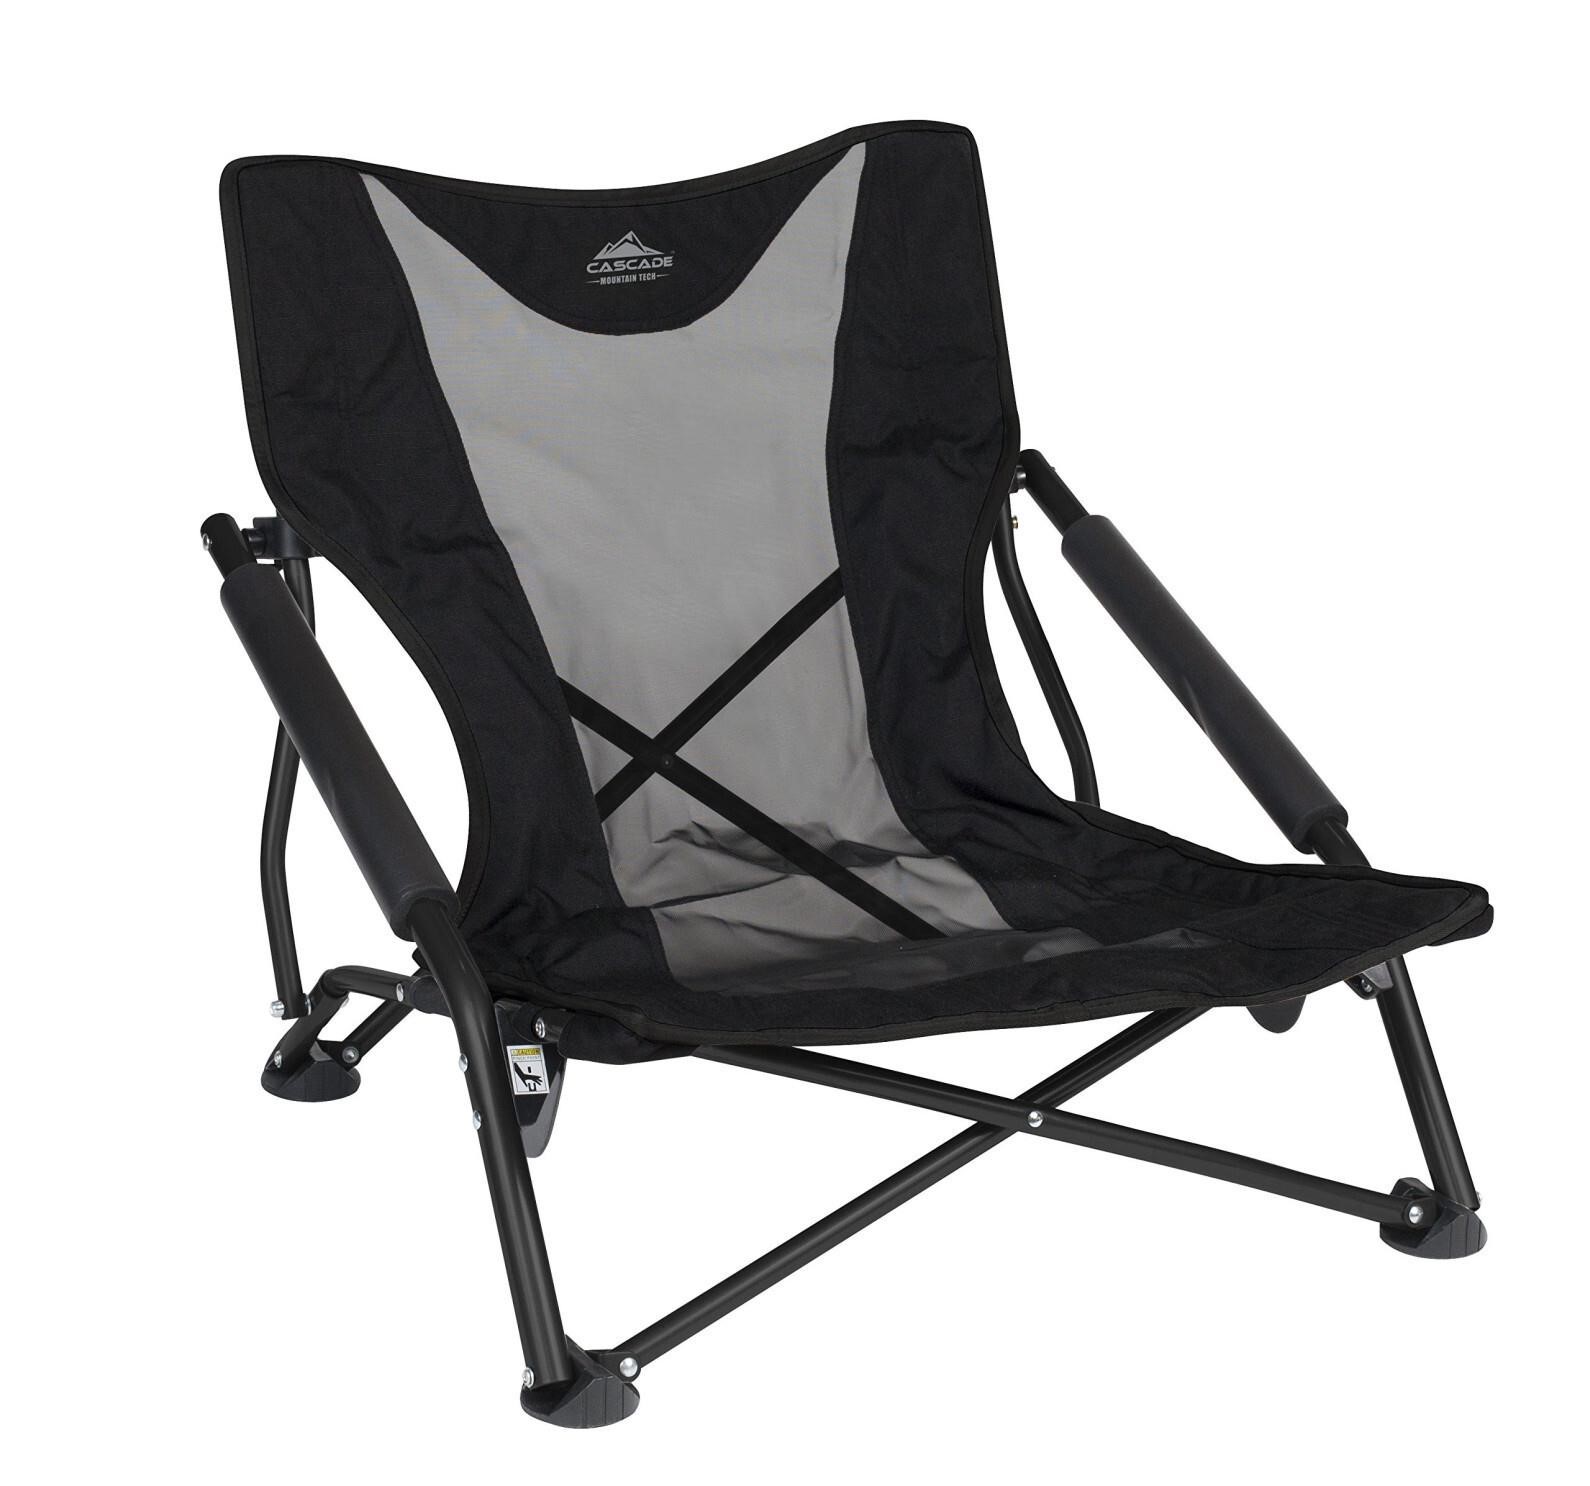 Cascade Mountain Tech Camping Chair - Low Profile